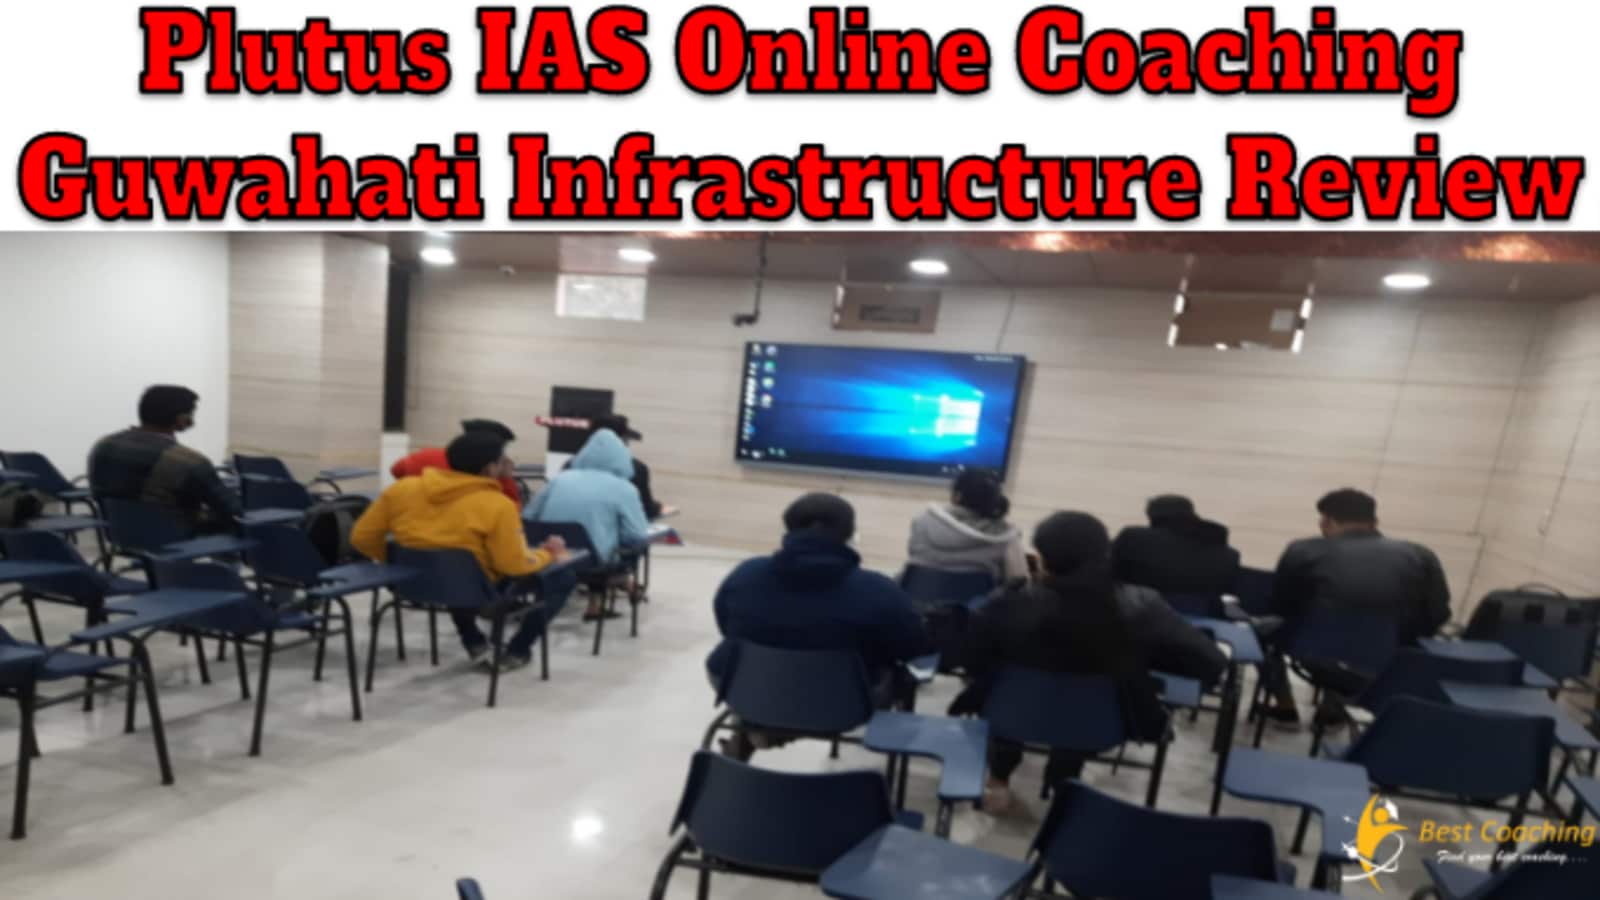 Plutus IAS Online Coaching Guwahati Infrastructure Review